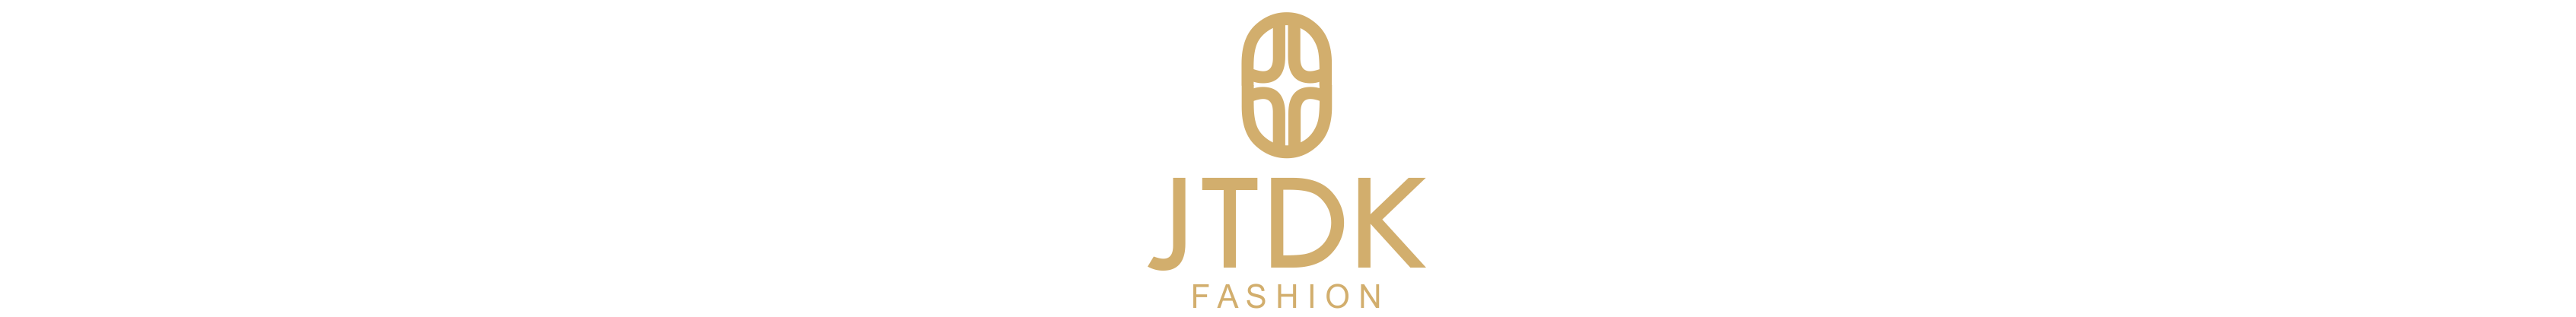 JTDK Fashion